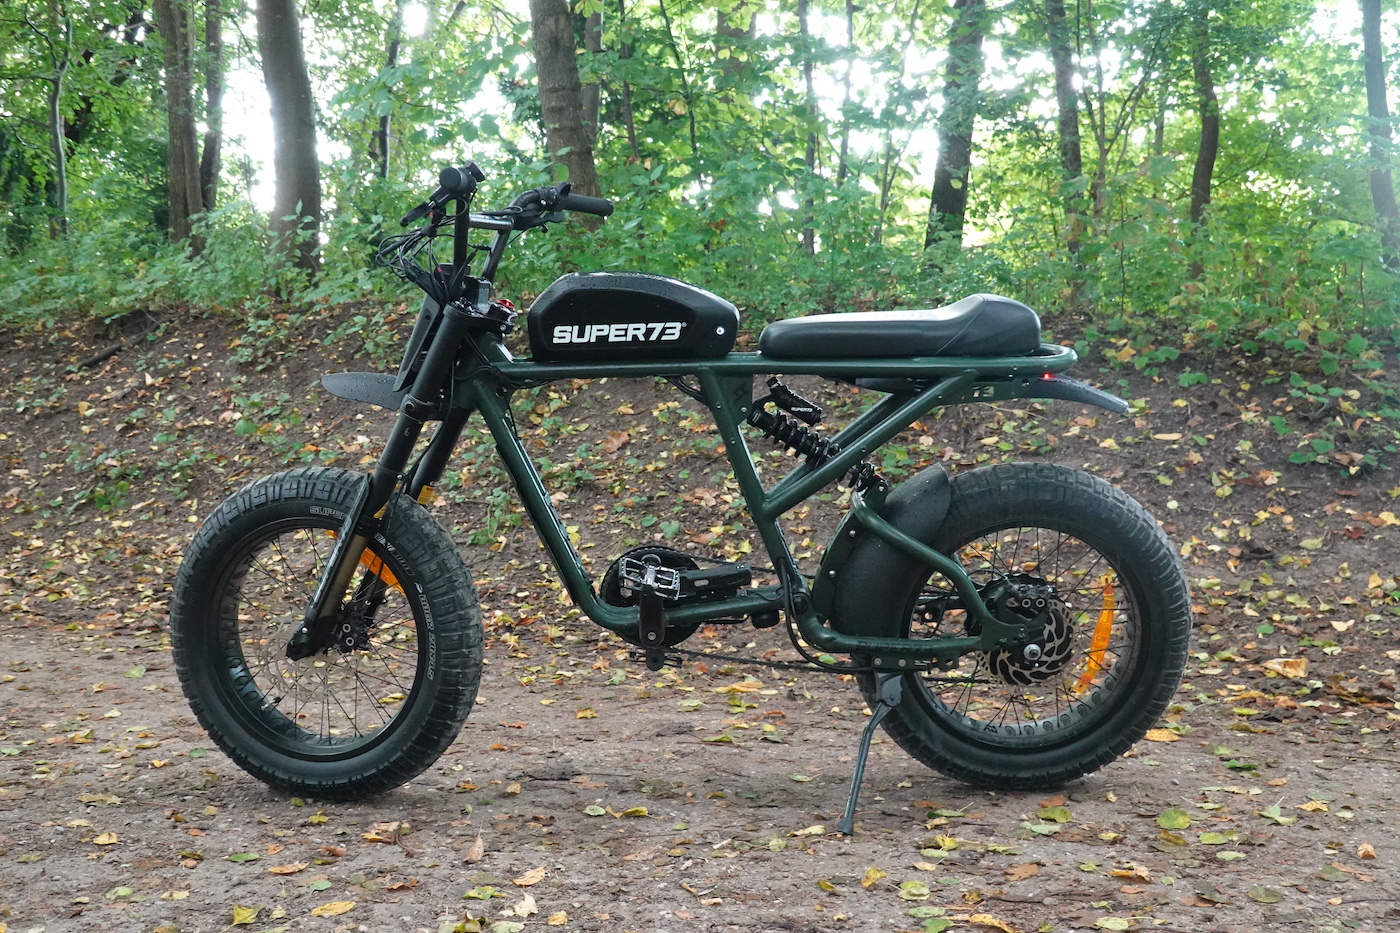 Super73 electric motorbike with 75 mile range $500 off Electrek